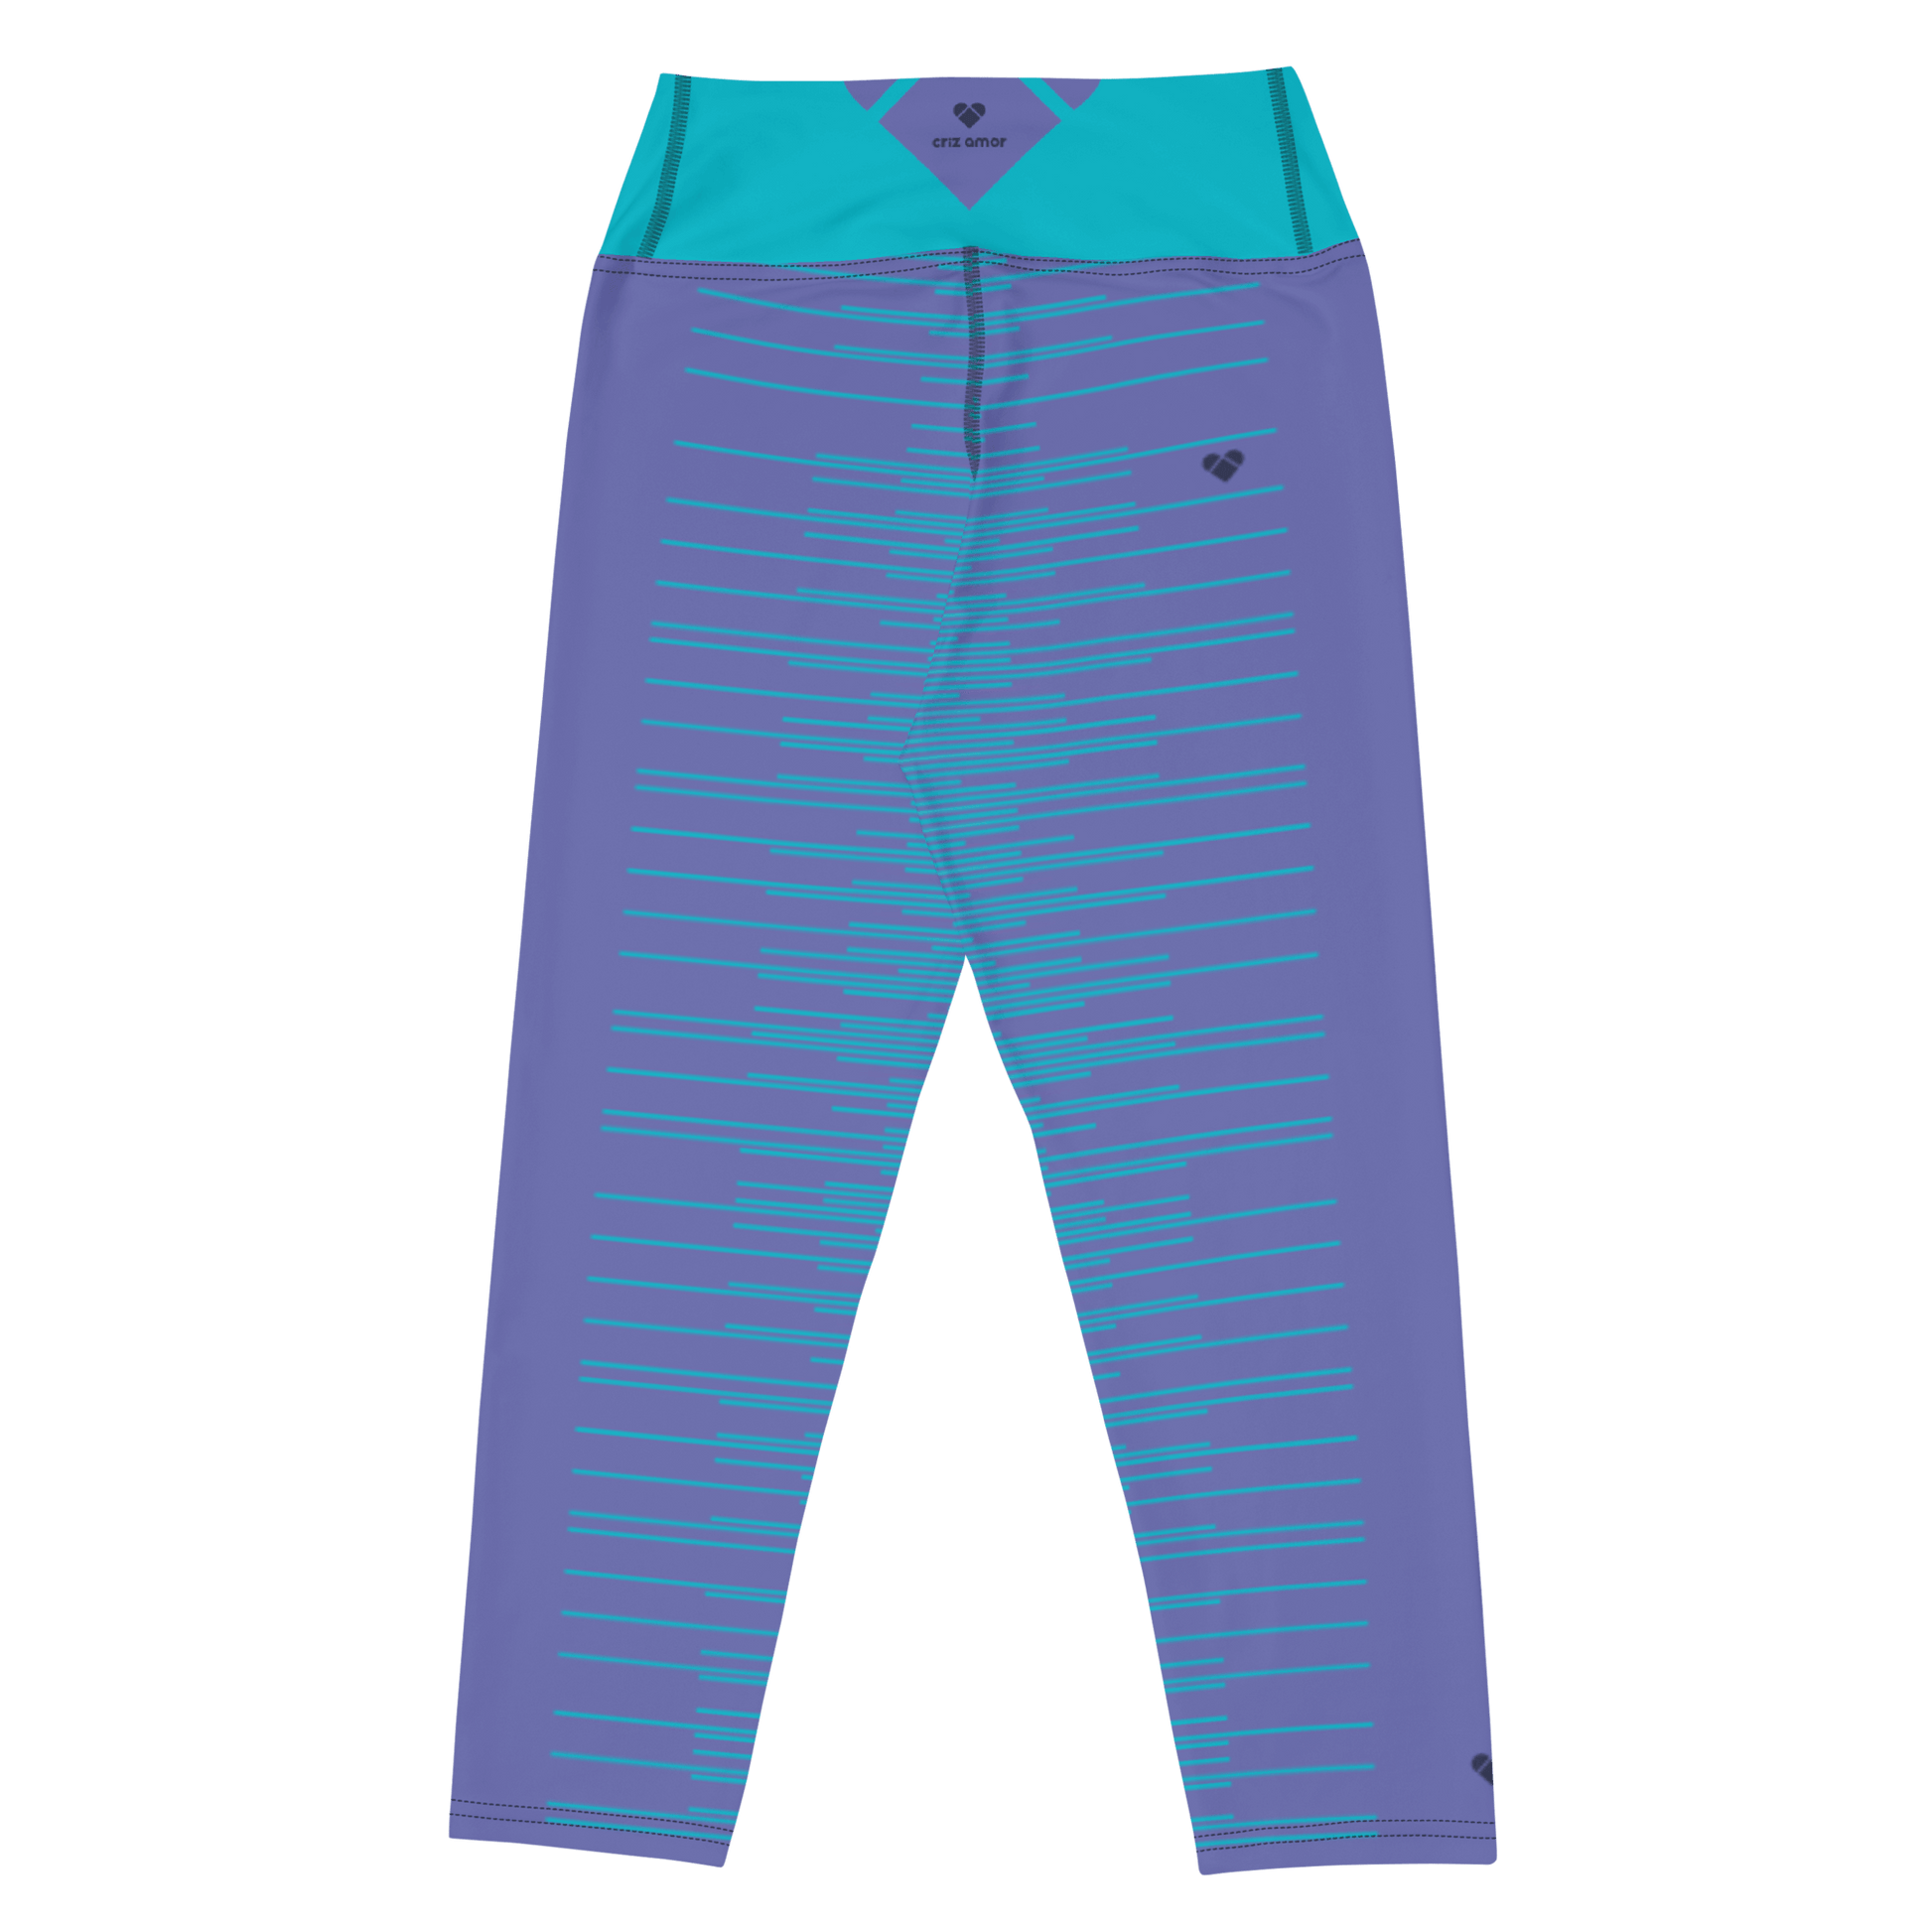 Periwinkle Dual Yoga Capri Leggings - A mesmerizing blend of periwinkle and turquoise stripes